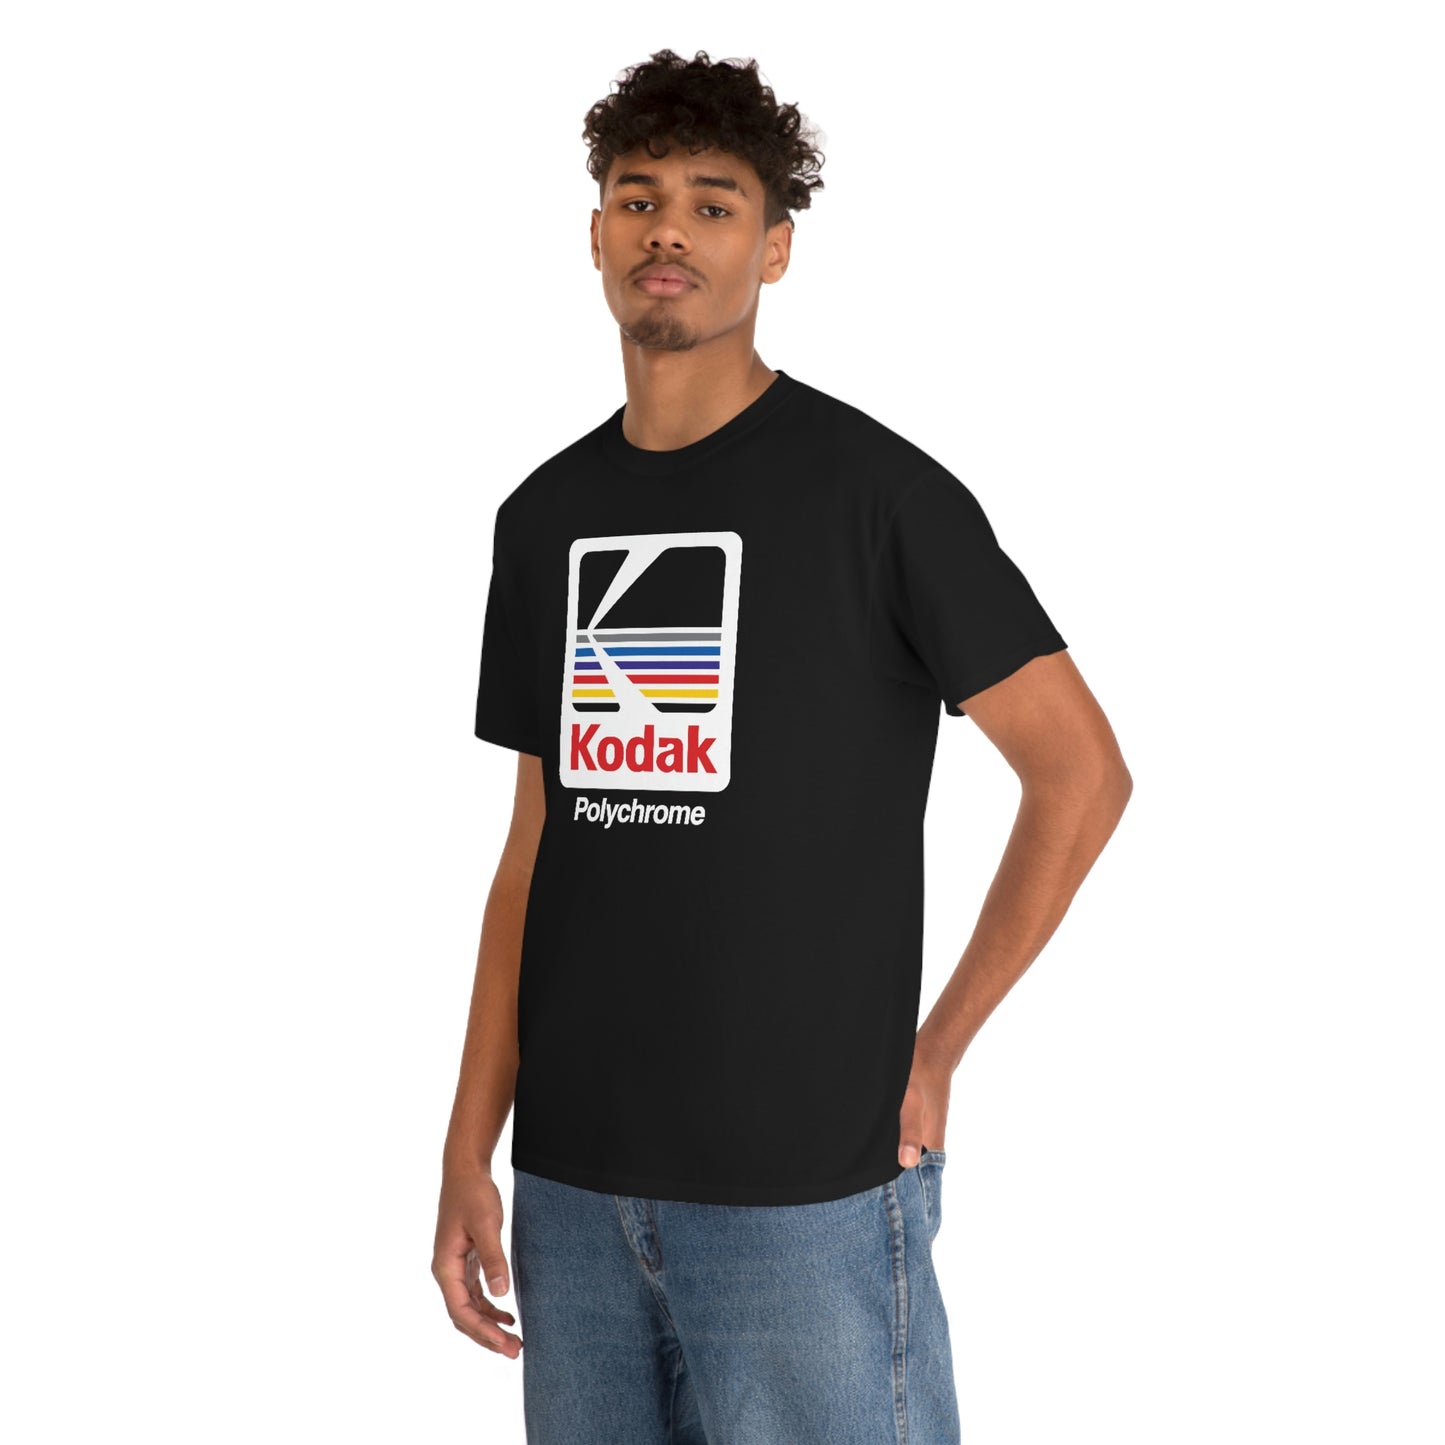 Kodak Polychrome T-Shirt